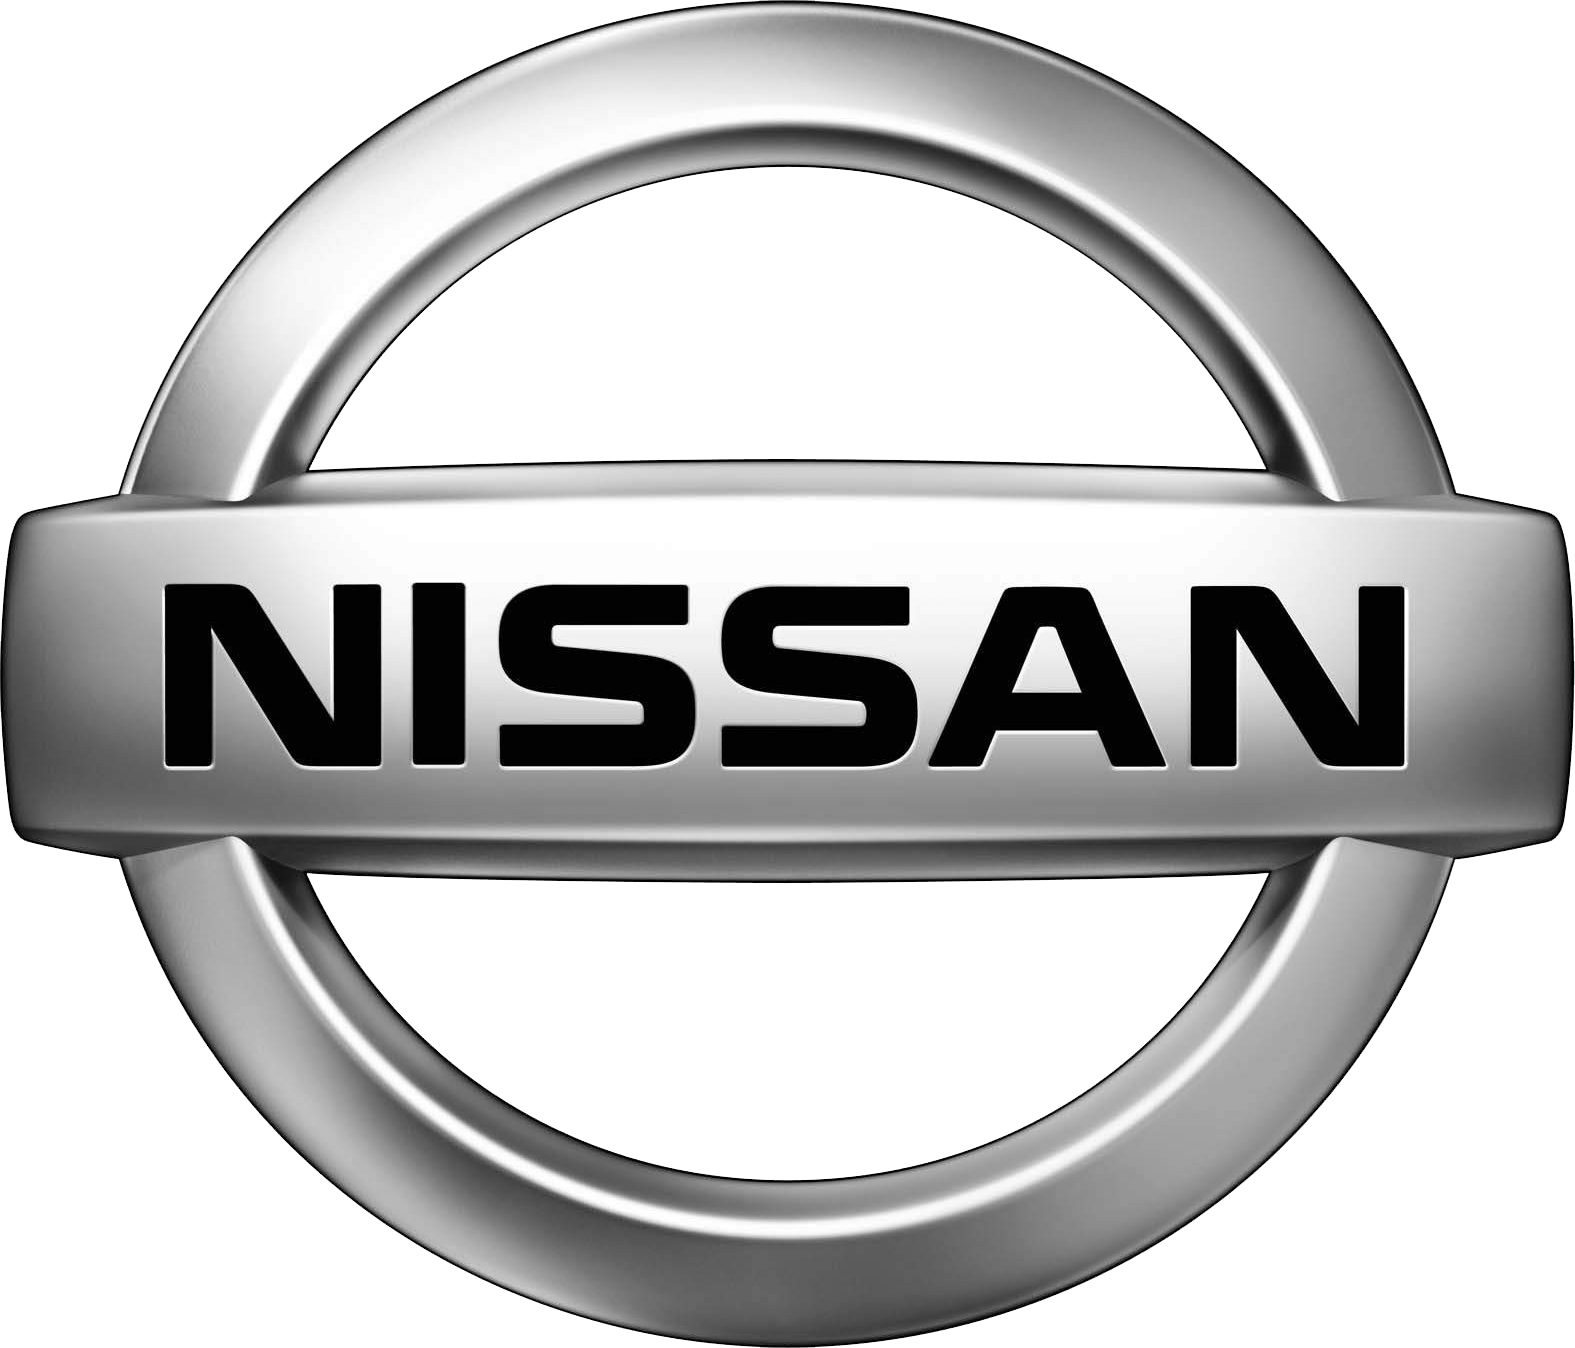 Nissan Cars Logo Hd Mobile Wa